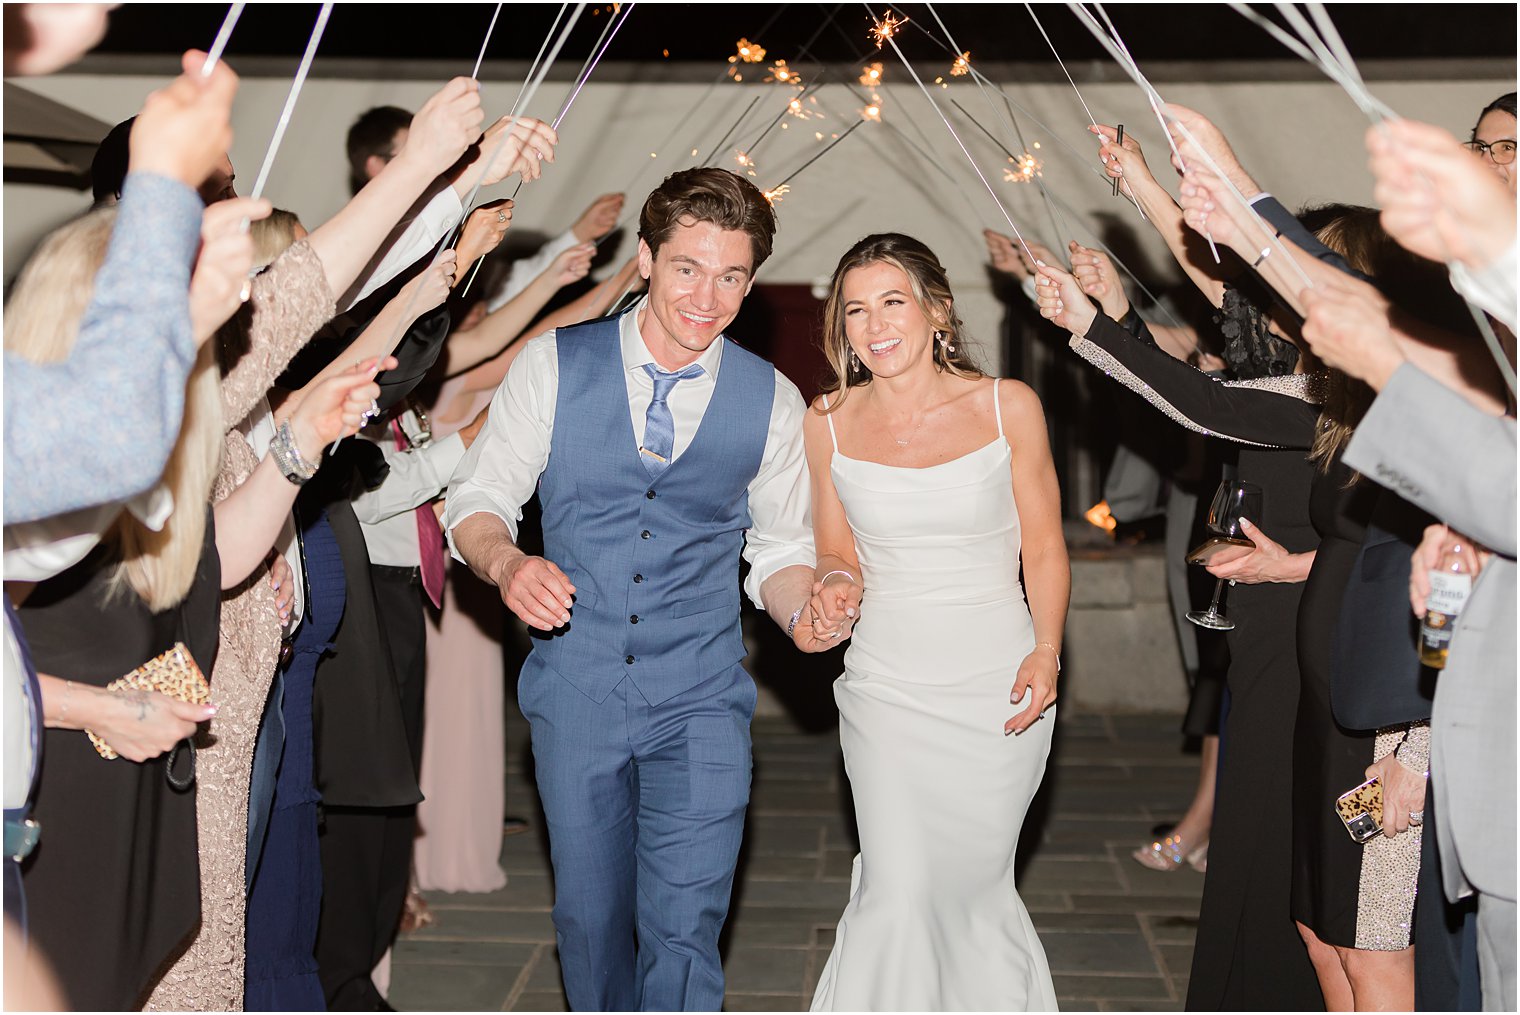 newlyweds hold hands going under sparklers after Ryland Inn wedding reception